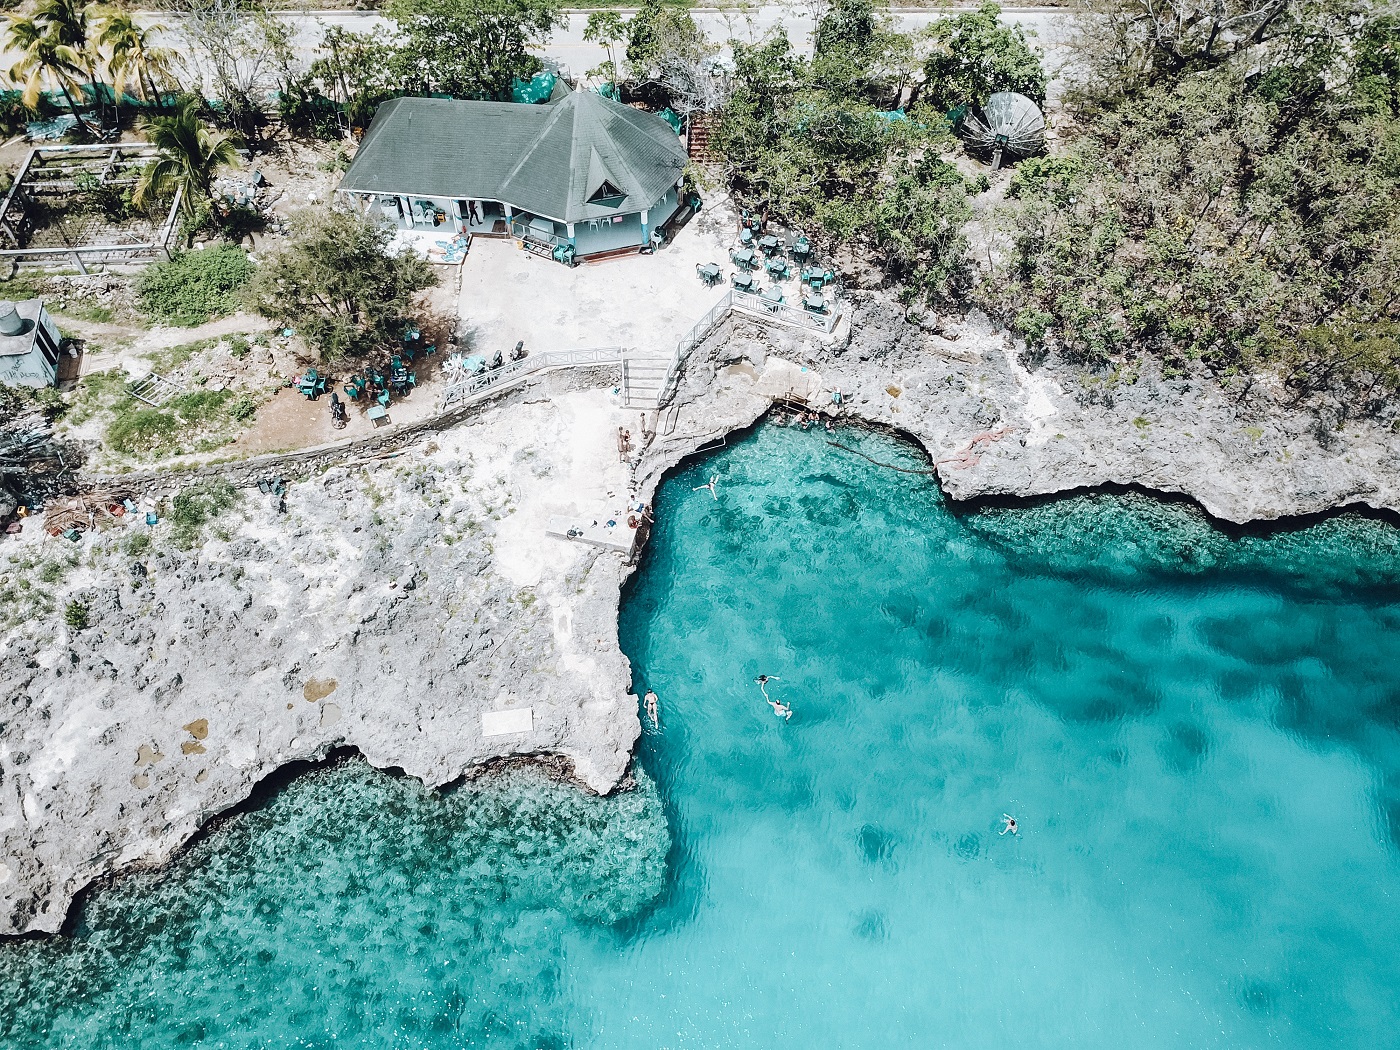 Vista de cima de uma das piscinas naturais de San Andrés (Foto: Gabriel Bester)